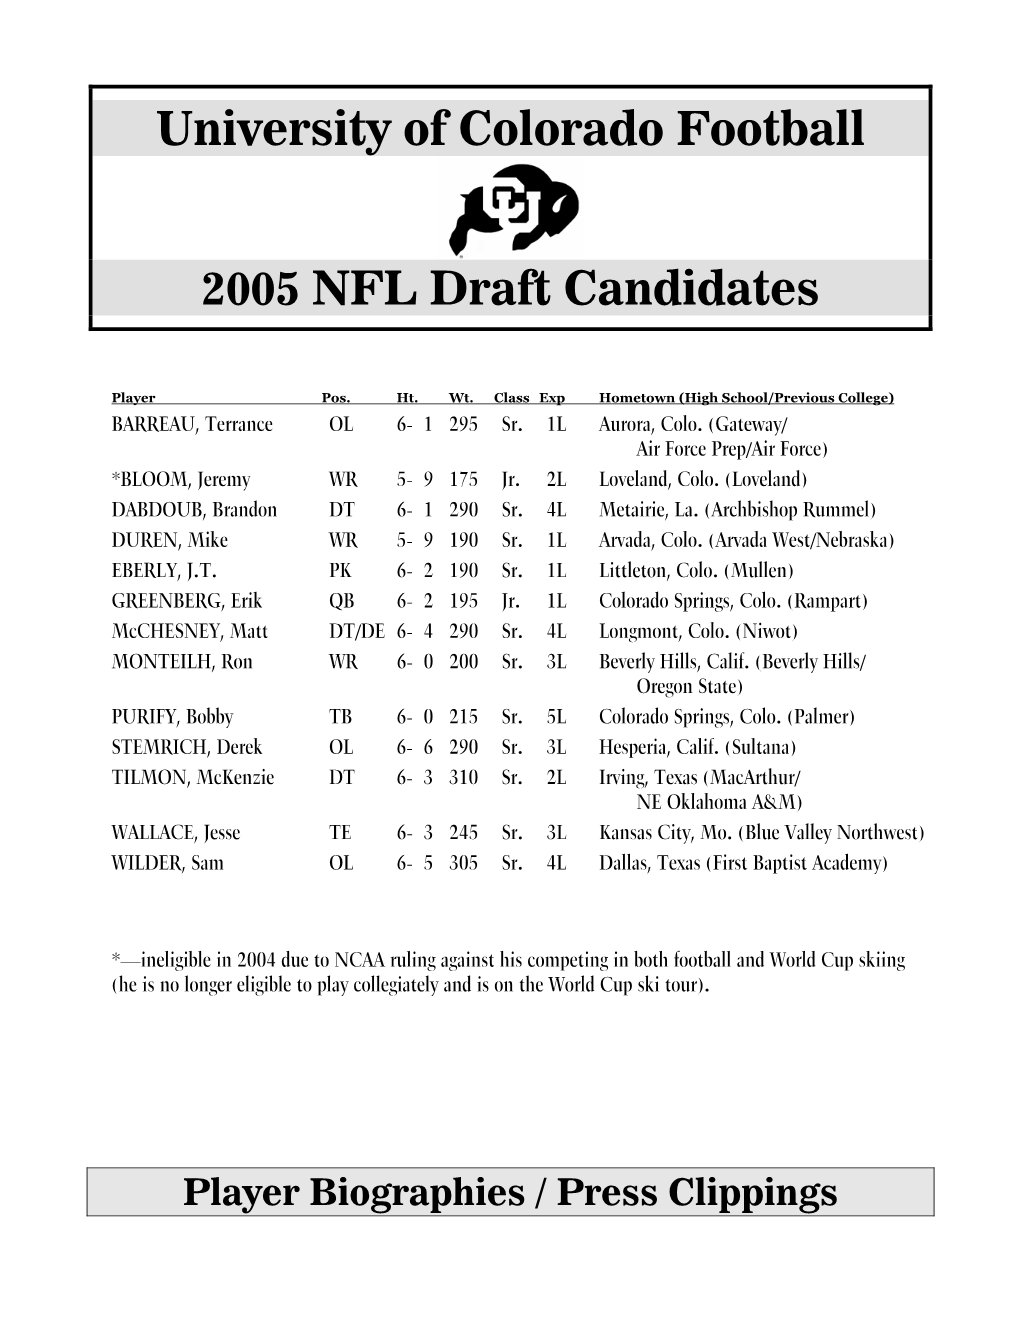 University of Colorado Football 2005 NFL Draft Candidates